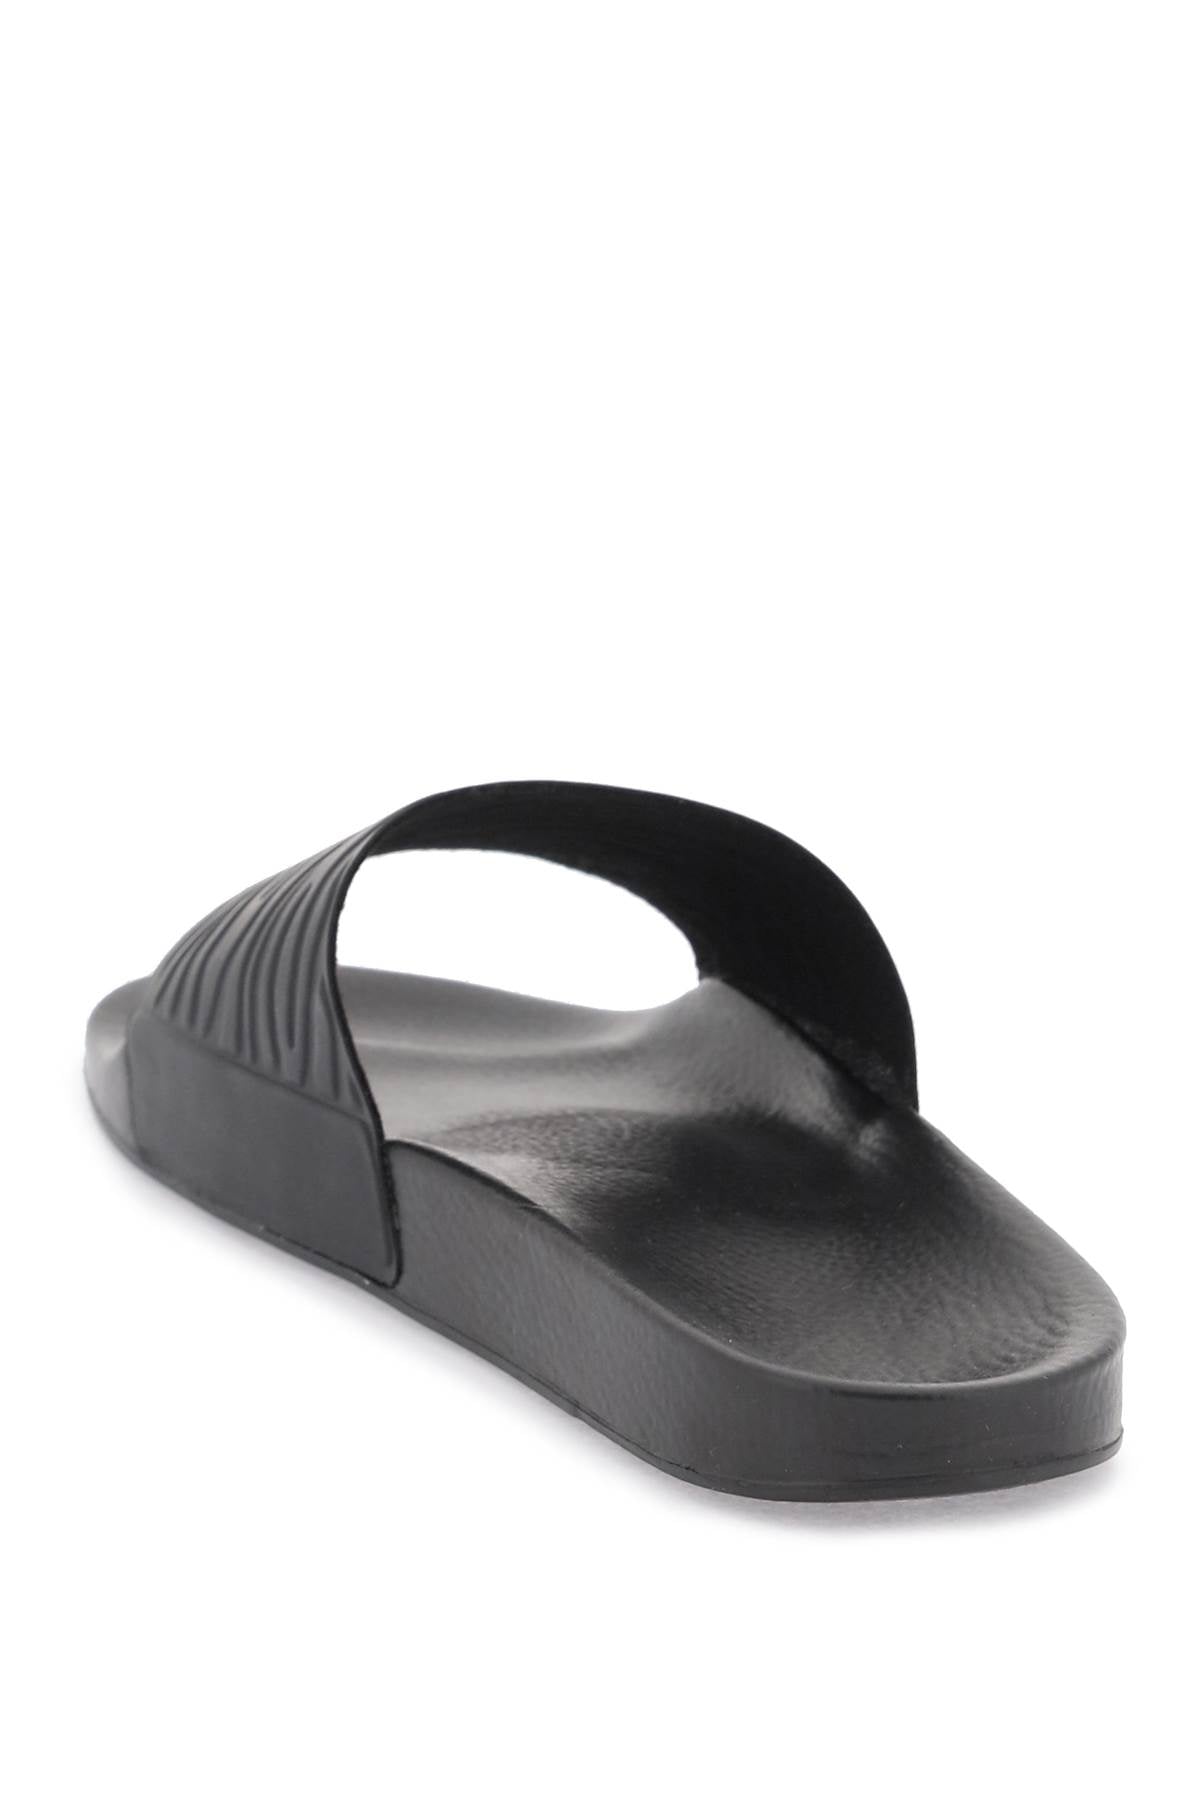 Ps paul smith rubber nyro slipper-2